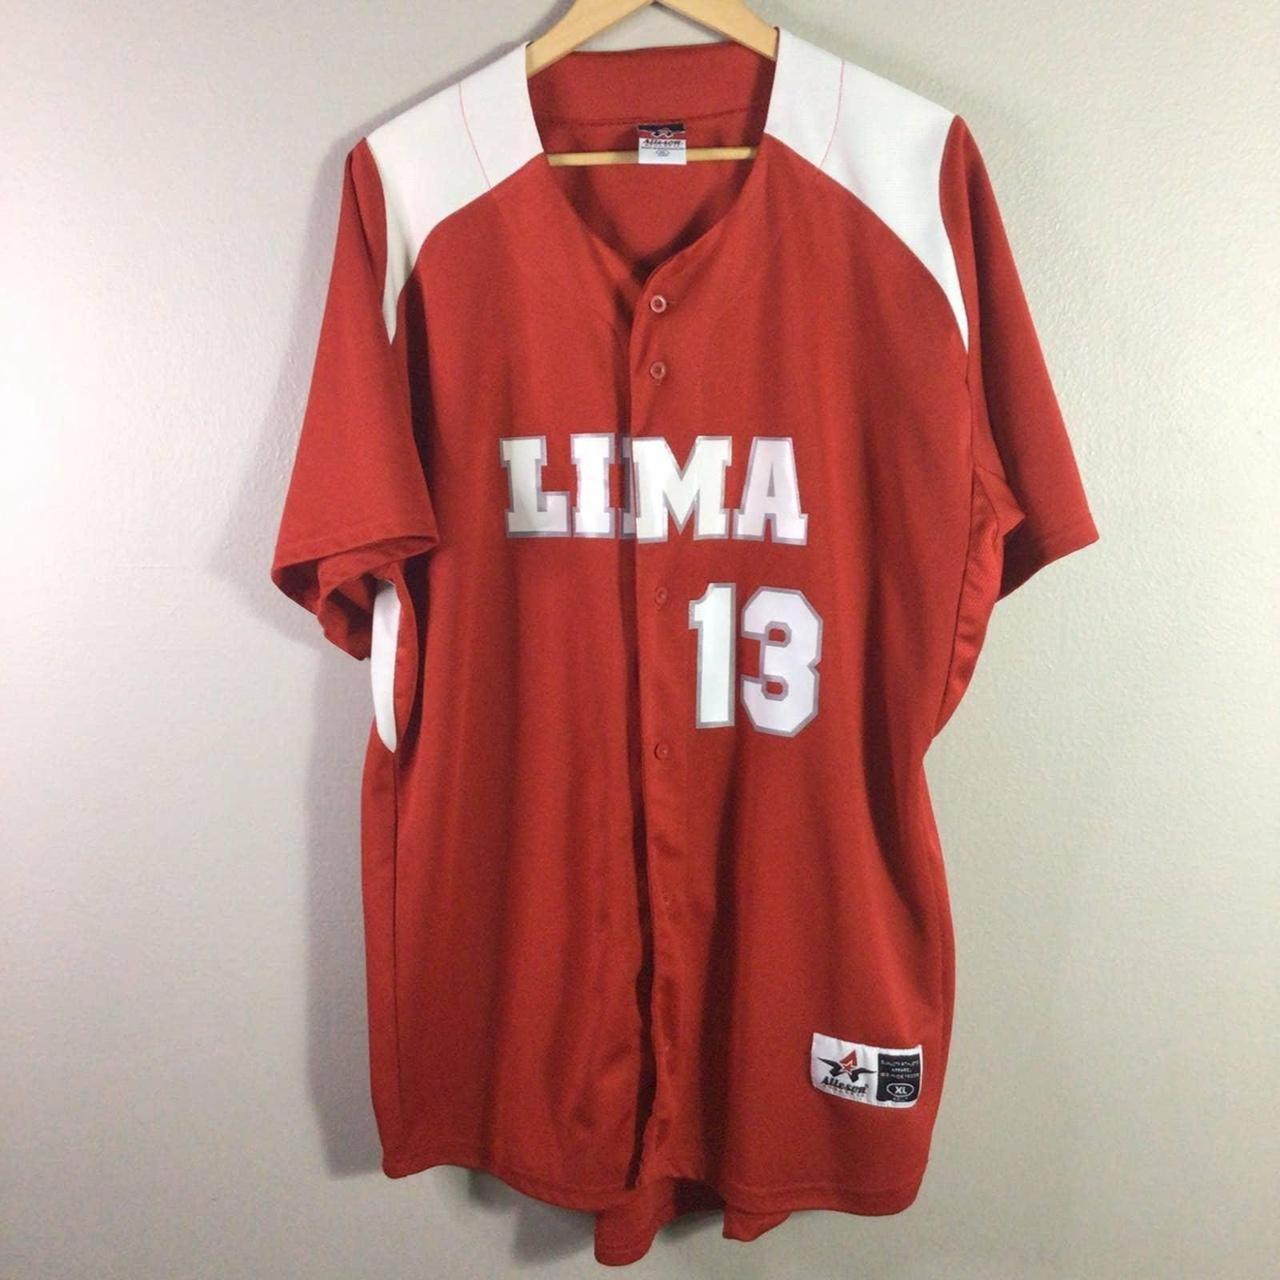 Lima 13 Rock Band jersey T Shirt Peru Red White... - Depop